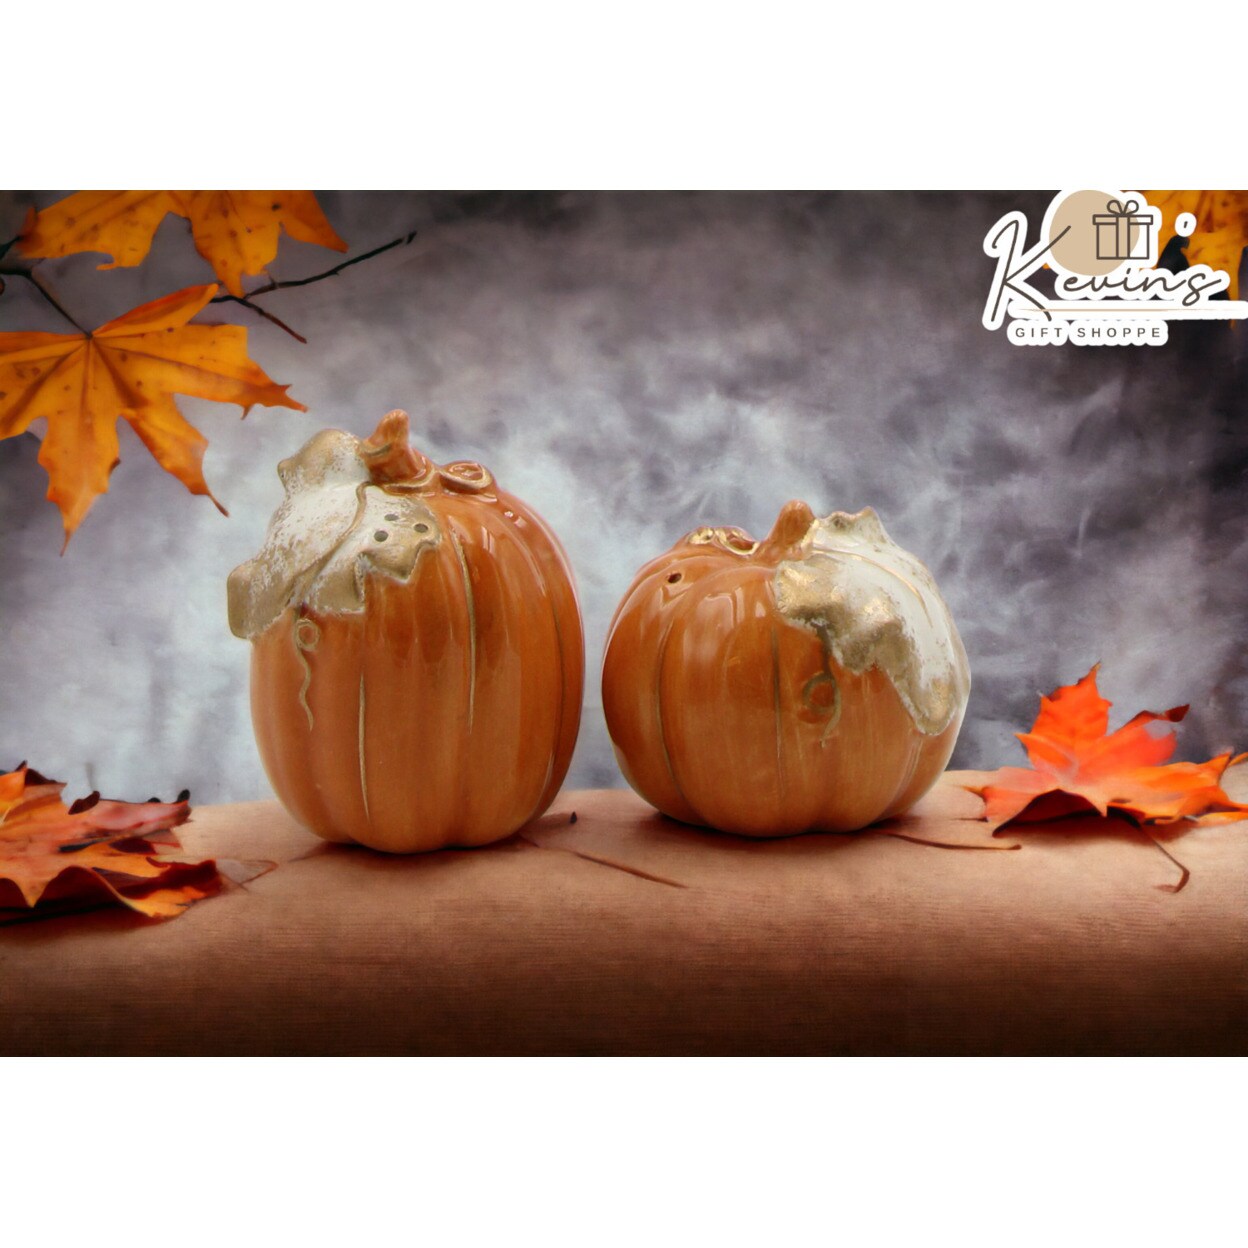 kevinsgiftshoppe Ceramic Autumn Harvest Pumpkins Salt and Pepper Home Decor  Mom Kitchen Decor Fall Decor Thanksgiving Decor